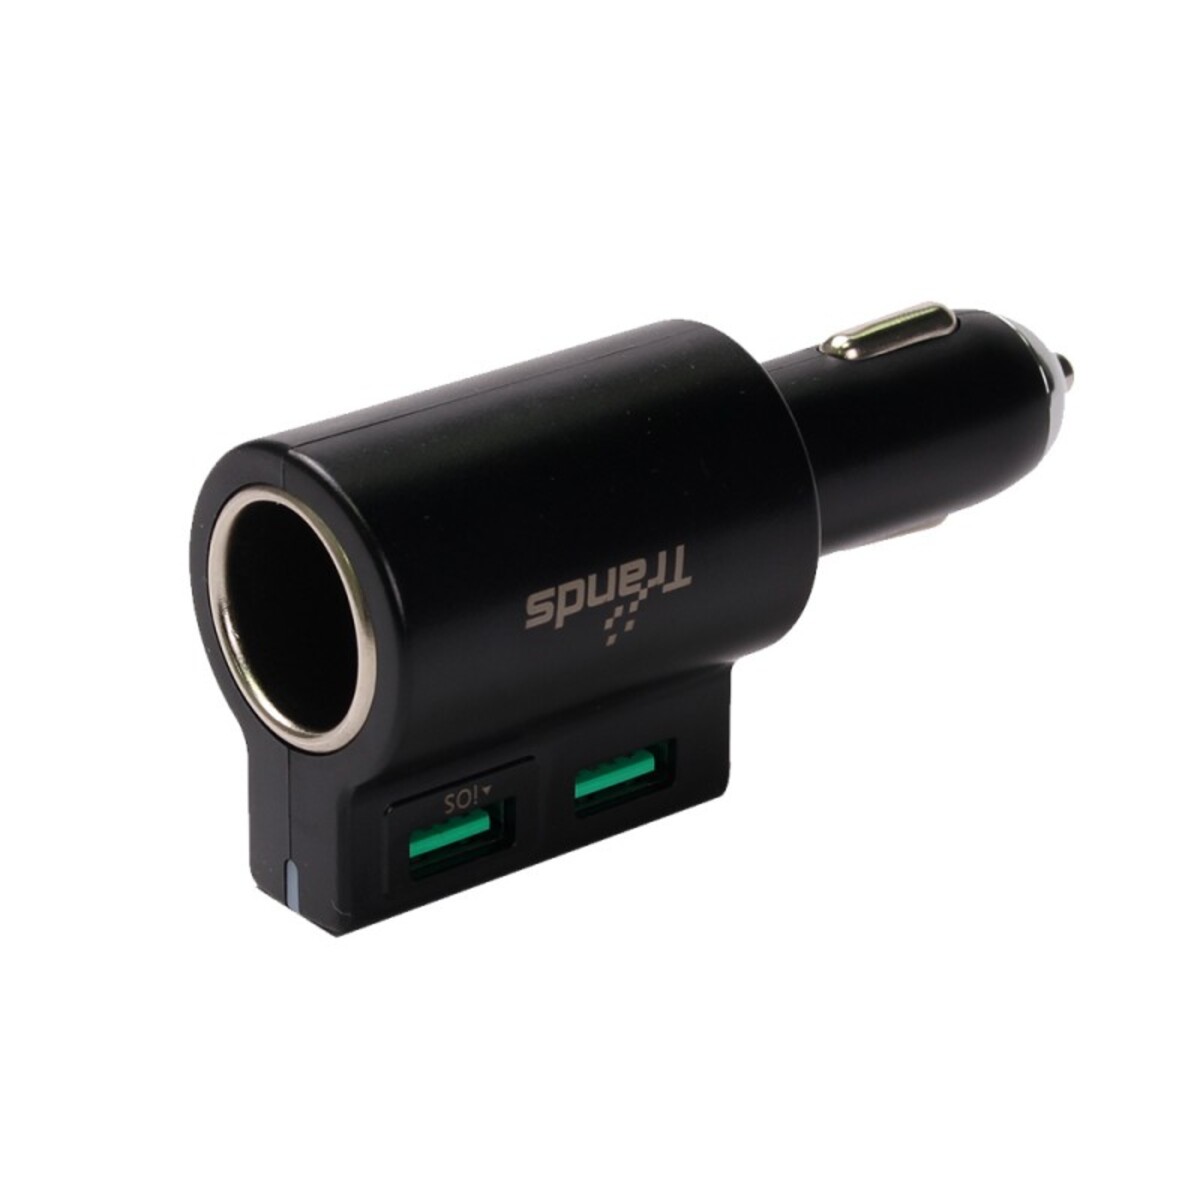 Trands Dual USB Port Car Charger Intelligent Shunt With Cigarette Lighter PC319